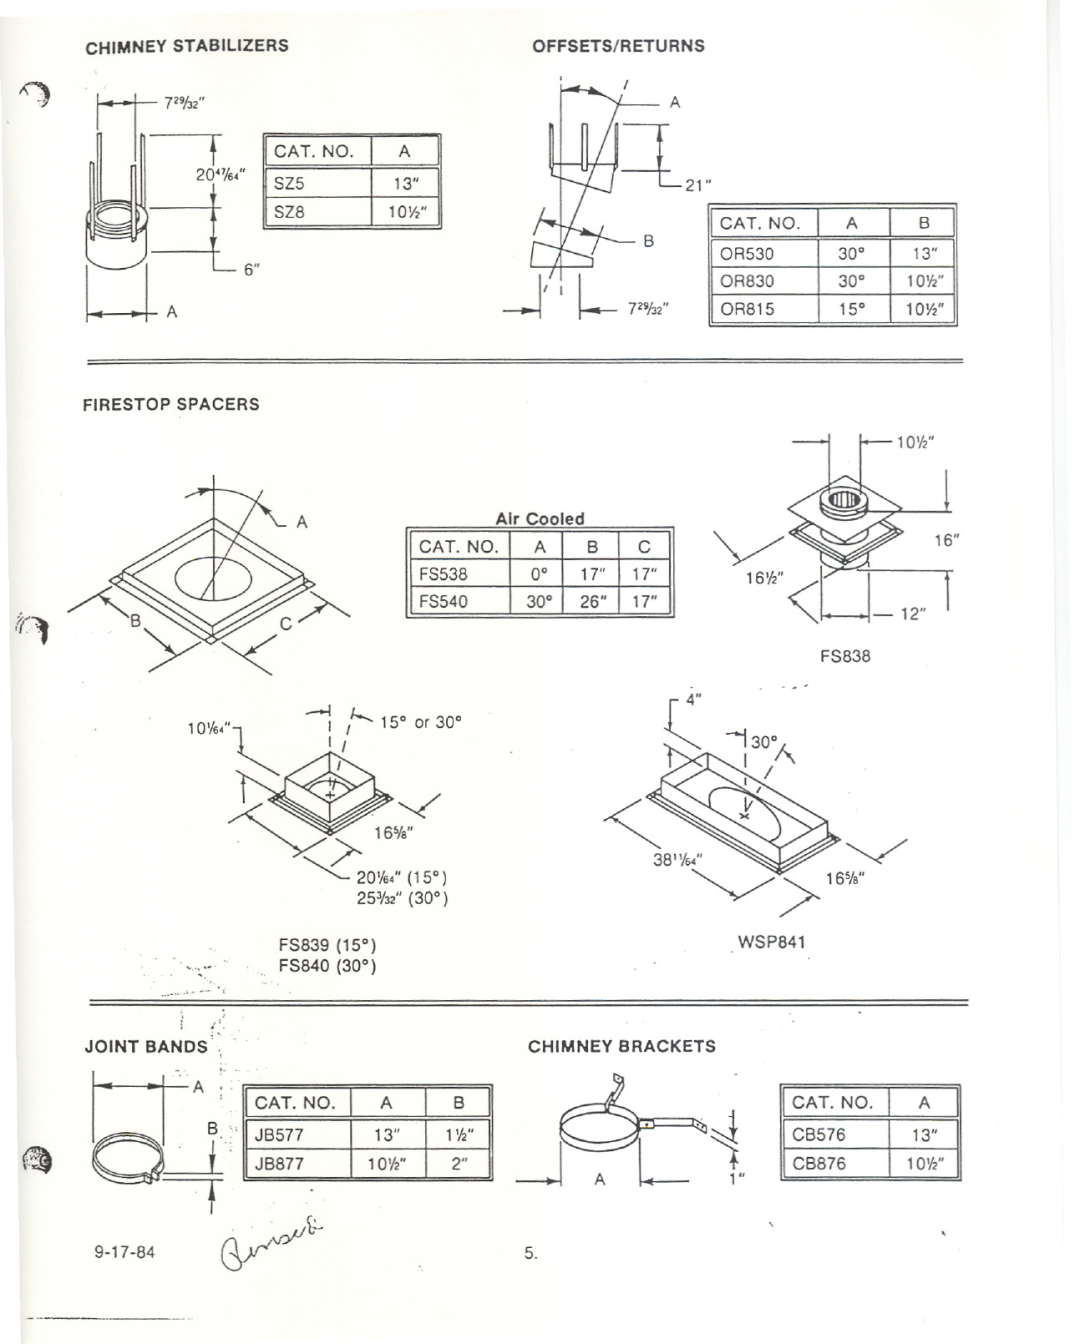 Heatiator BF36A manual 